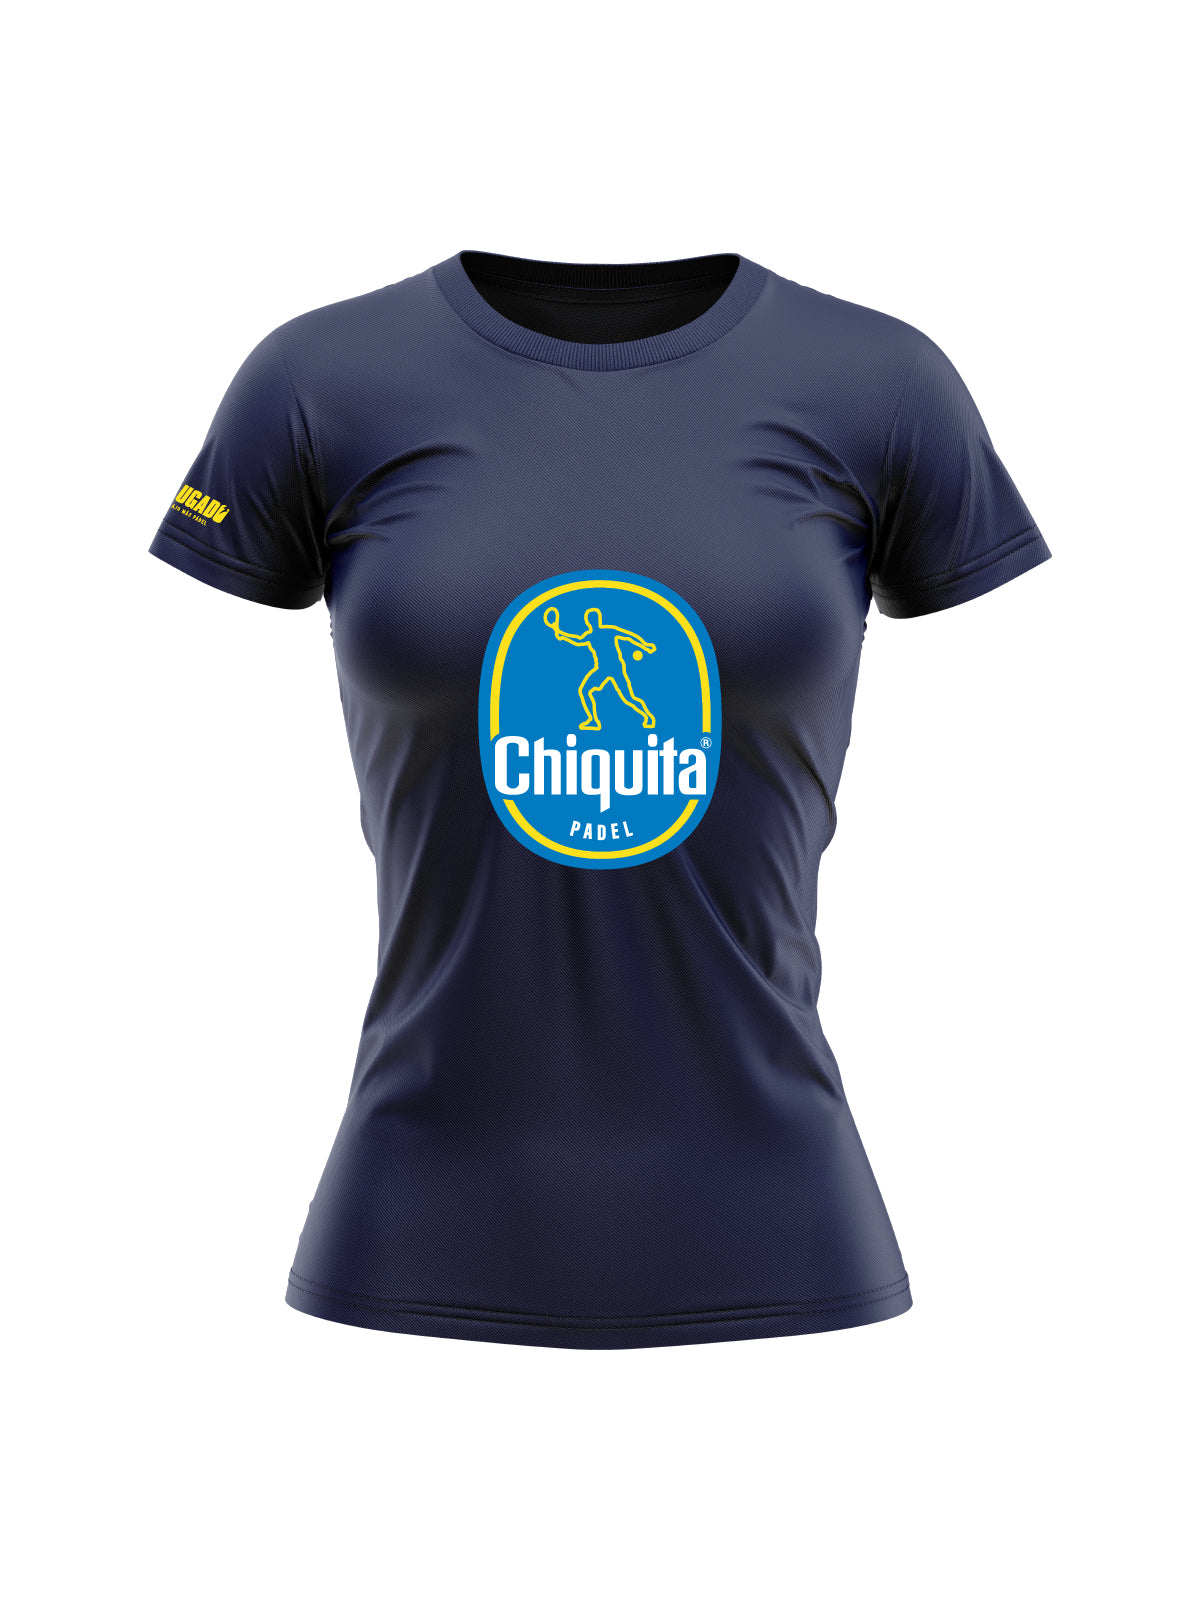 Women's Fun Quick Dry T-Shirt - Chiquita